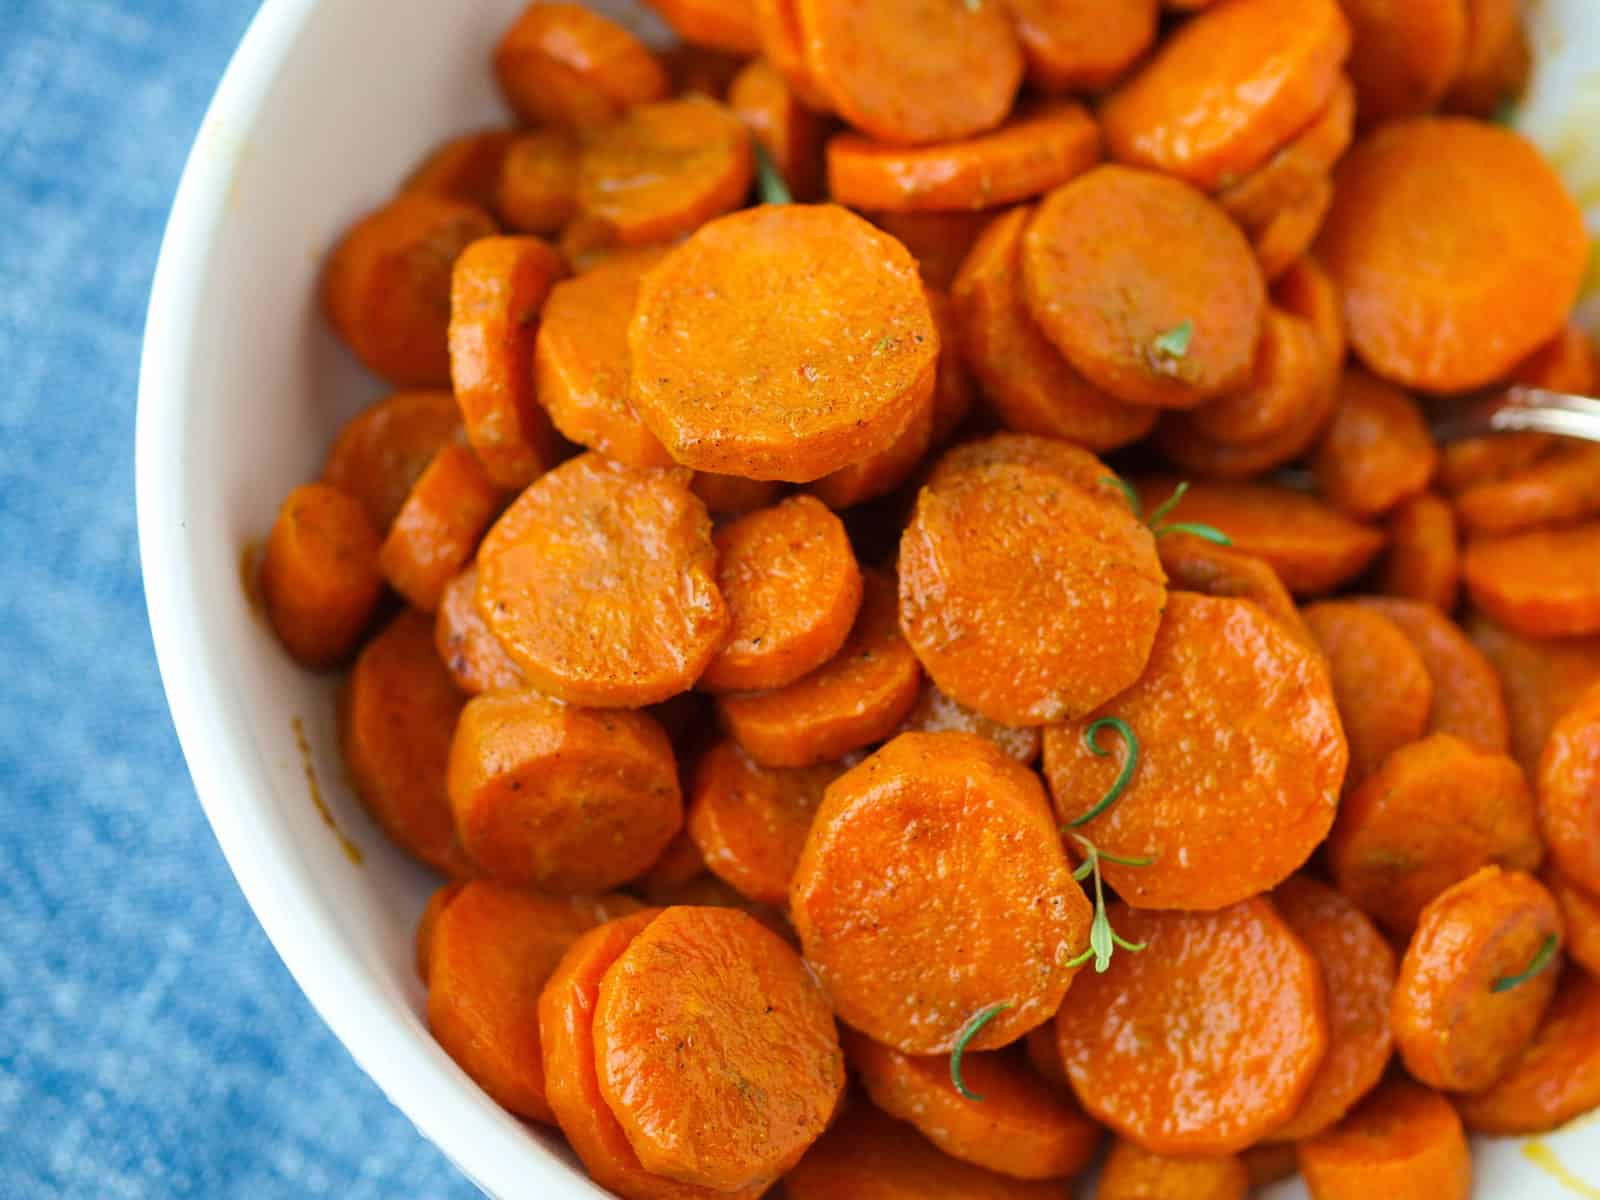 A bowl of Oven Roasted Turmeric & Cumin Carrots